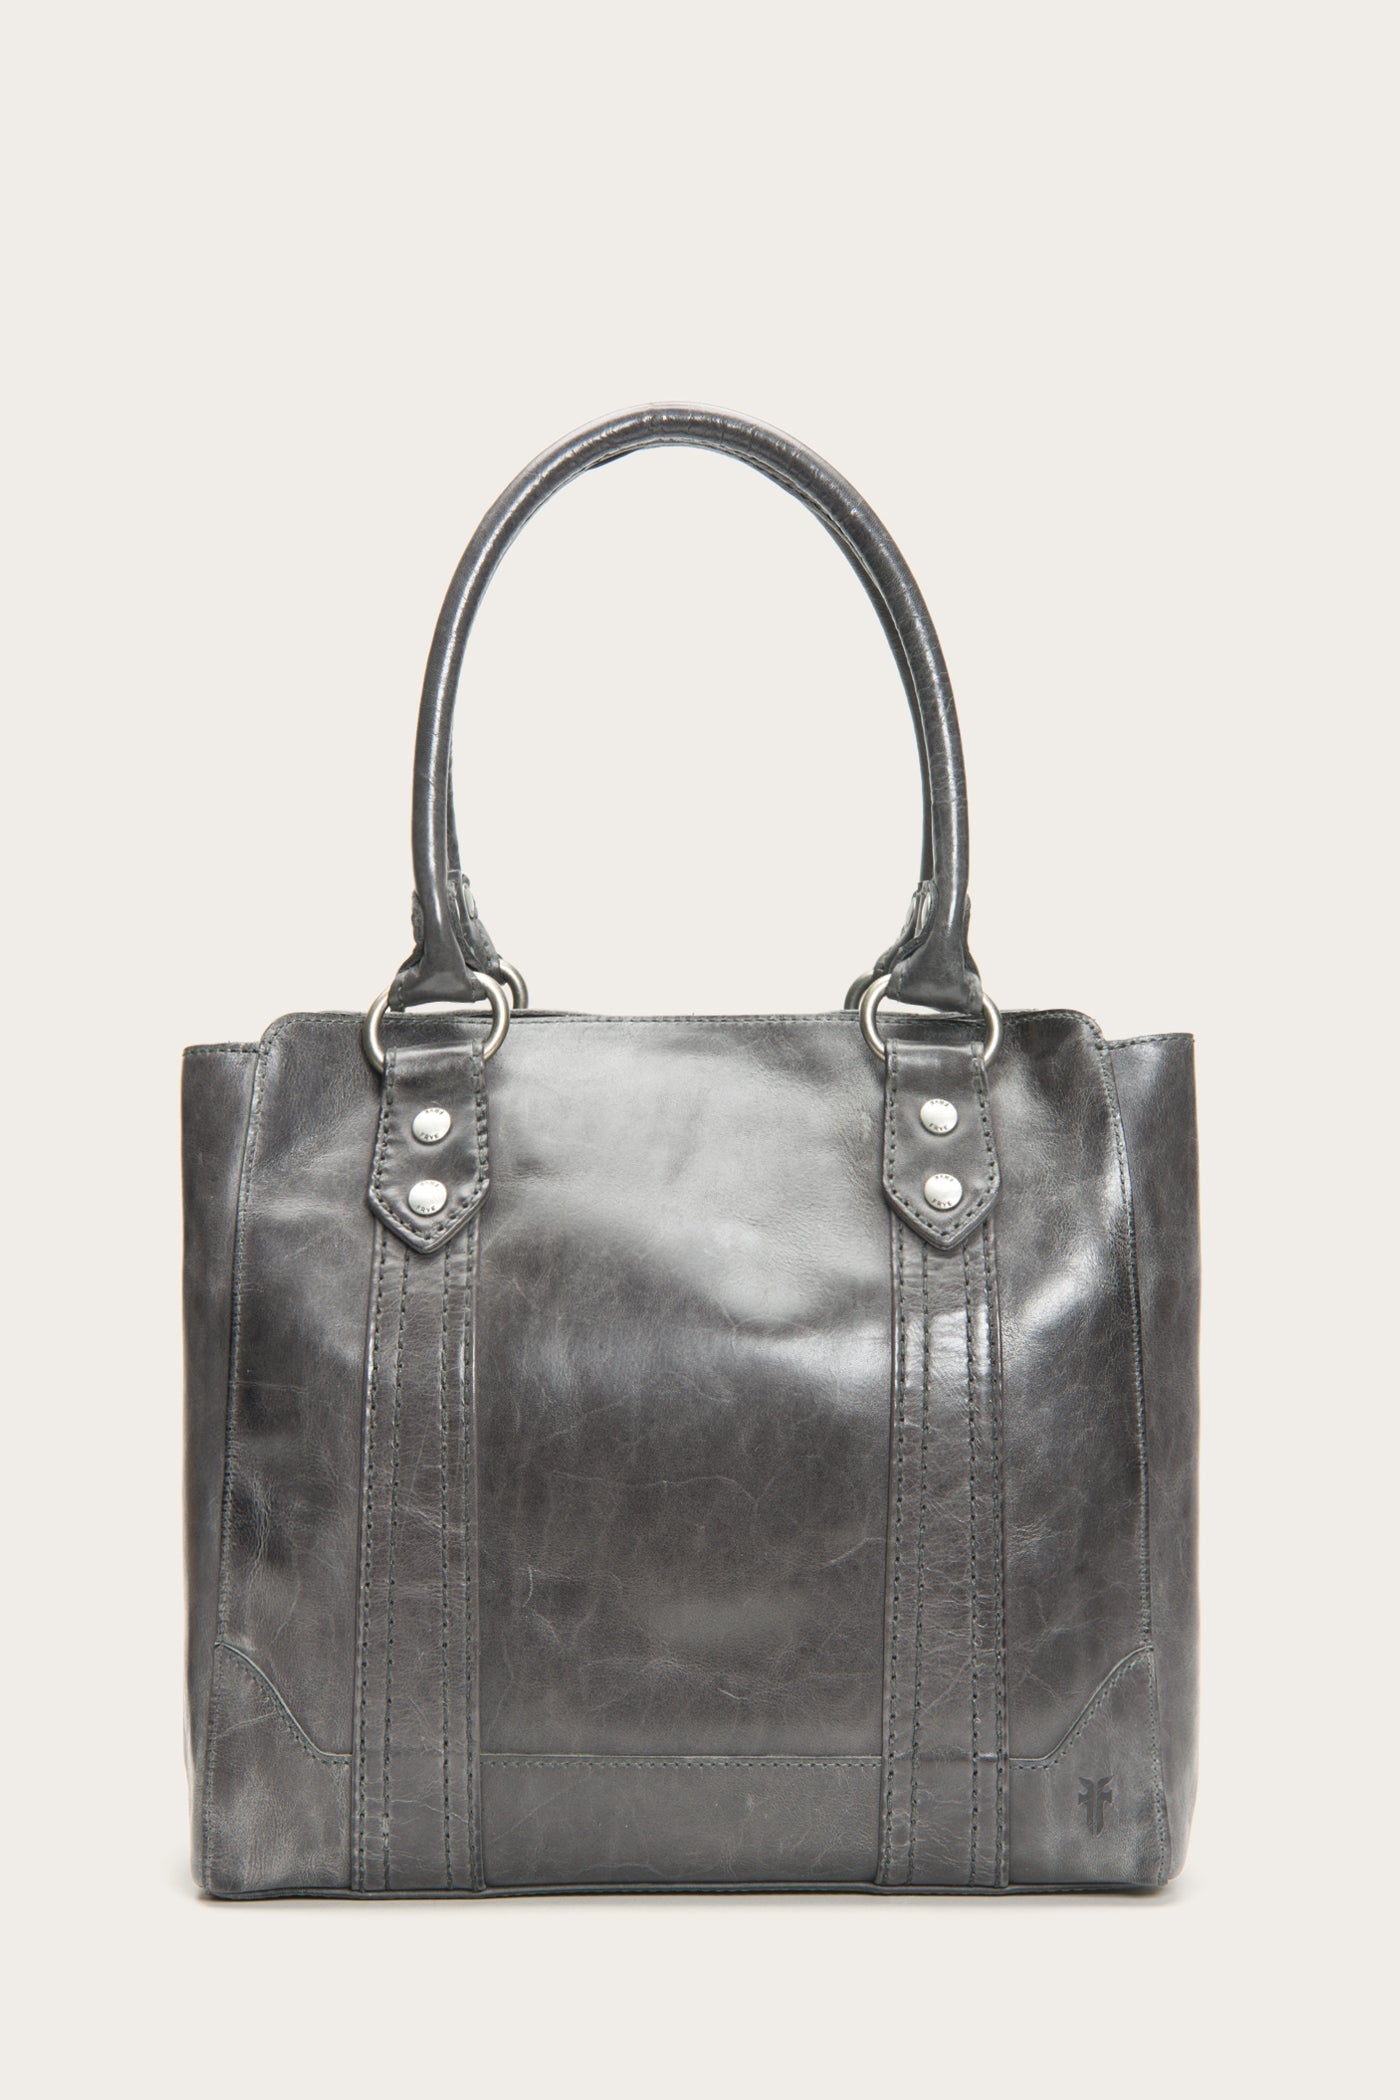 Melissa Traveler Bag | The Frye Company